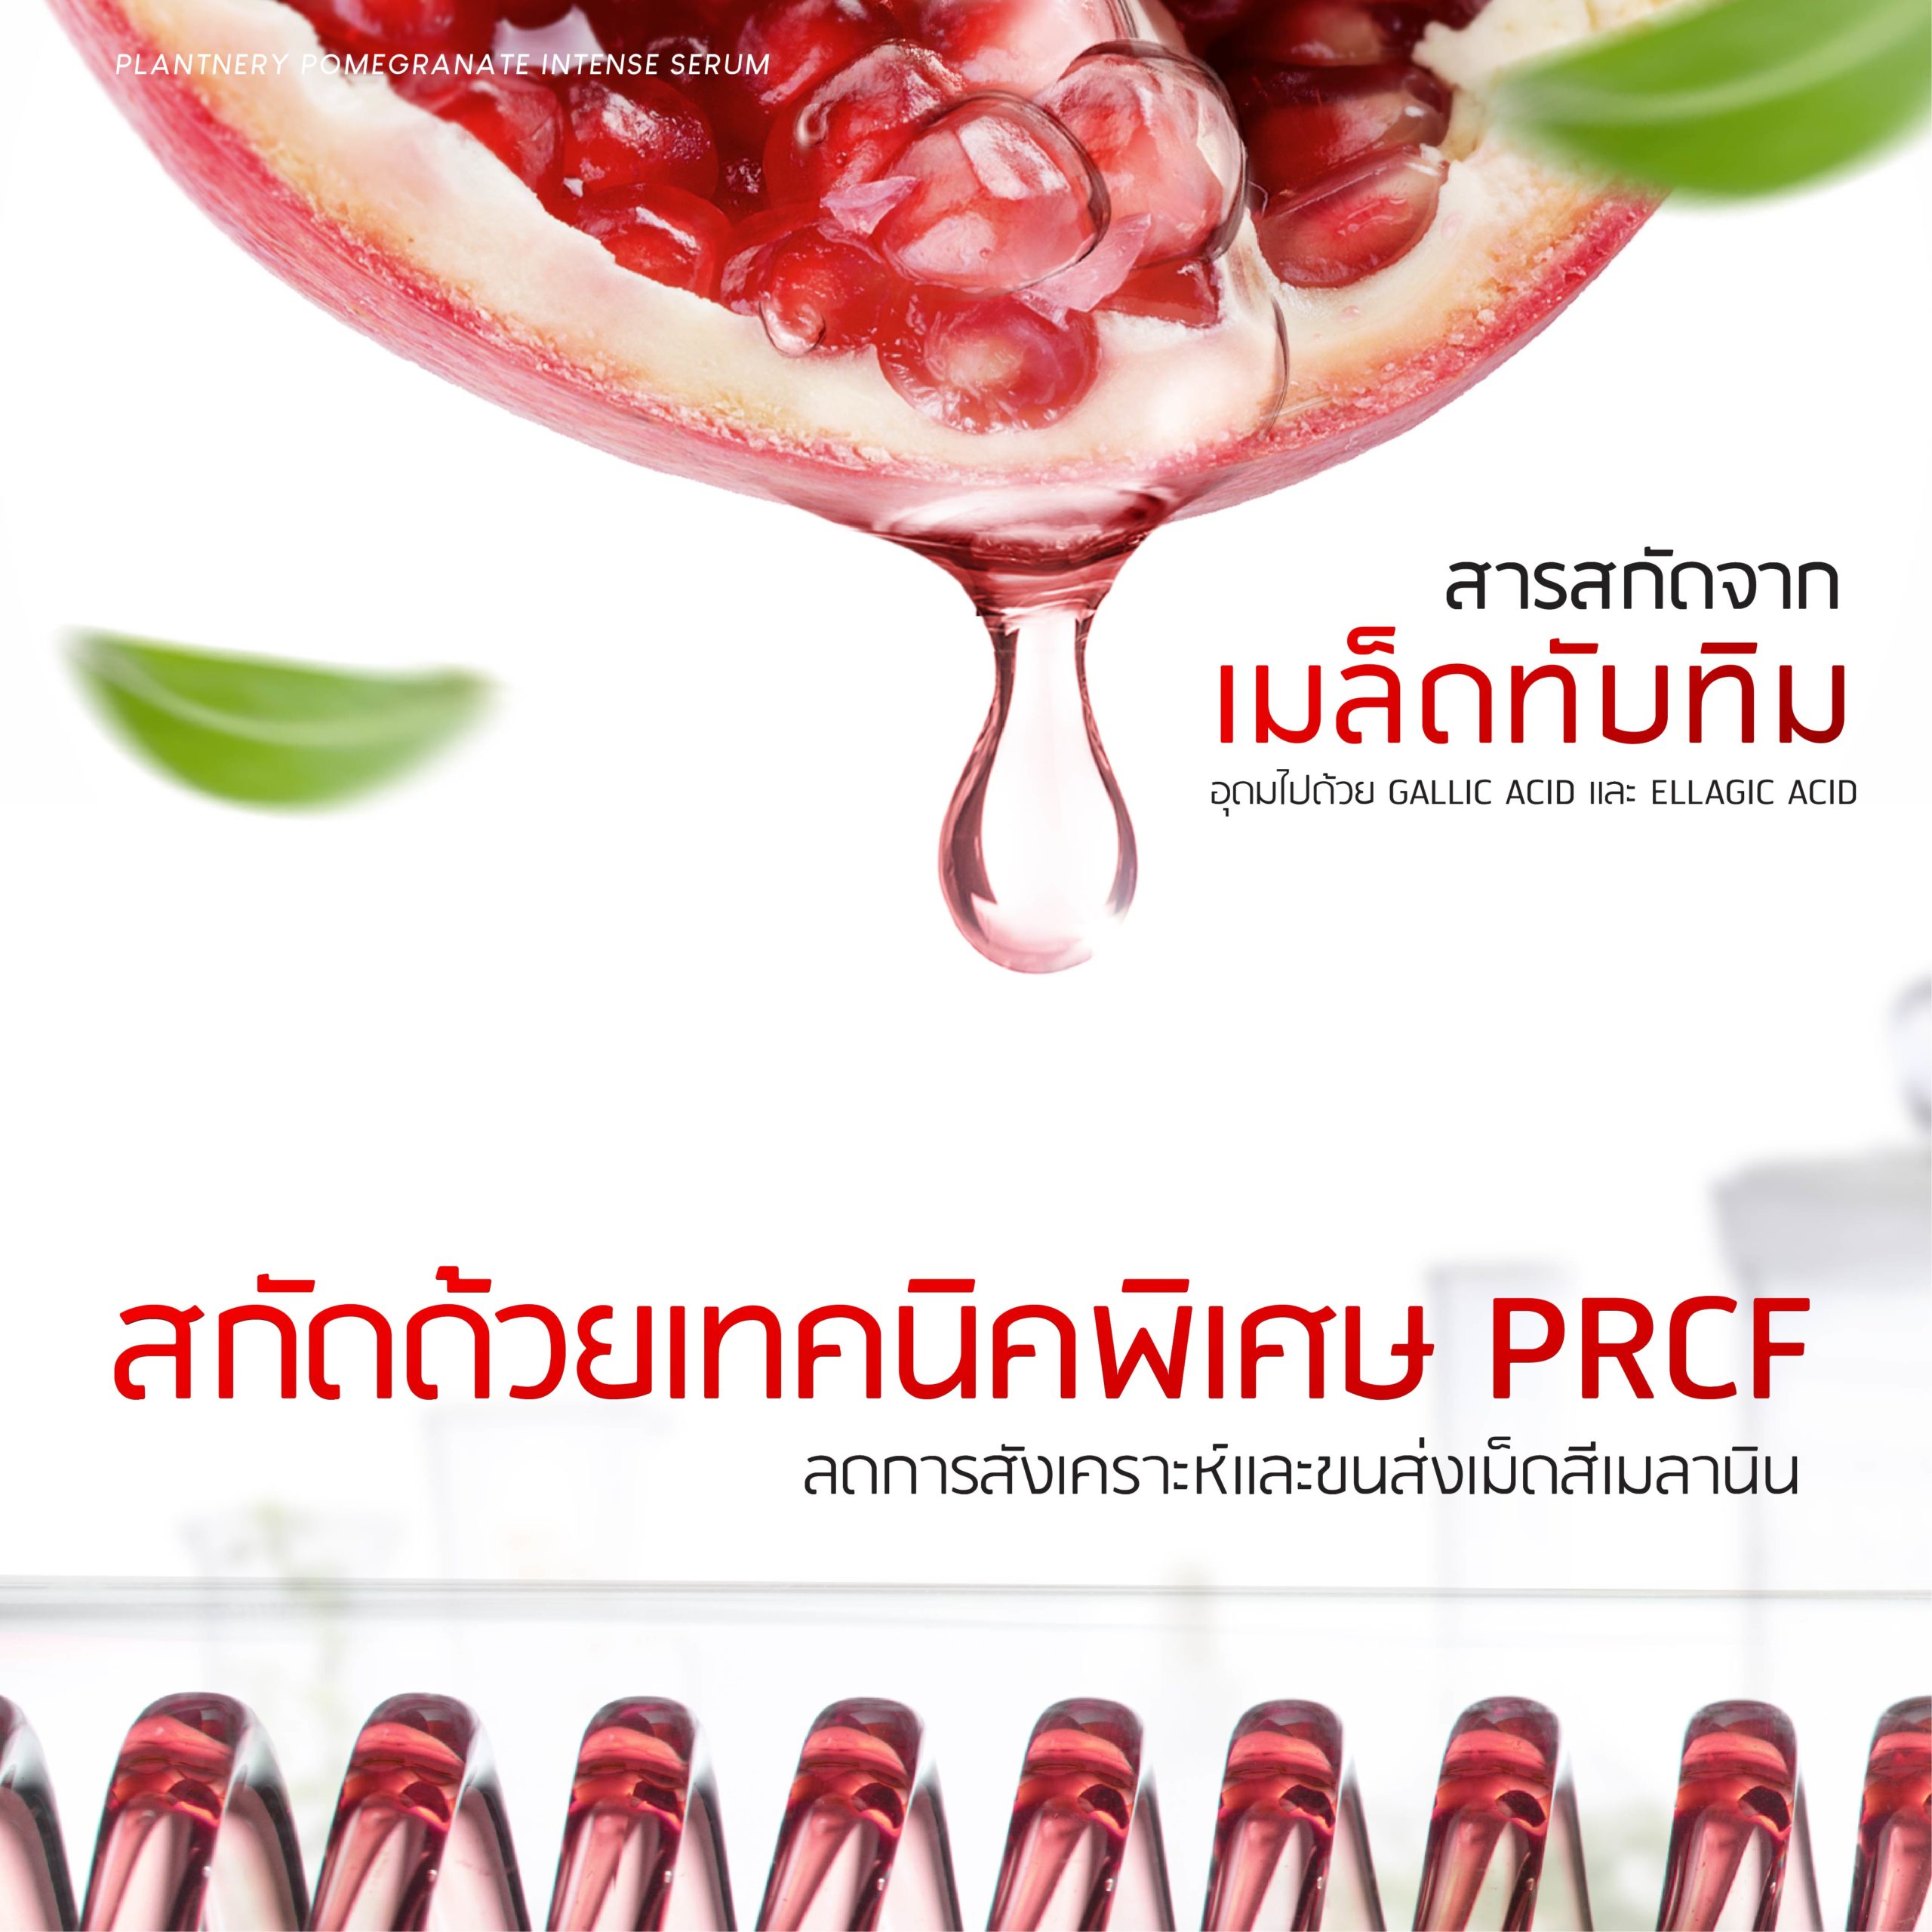 Pomegranate intense serum Rev.2 03